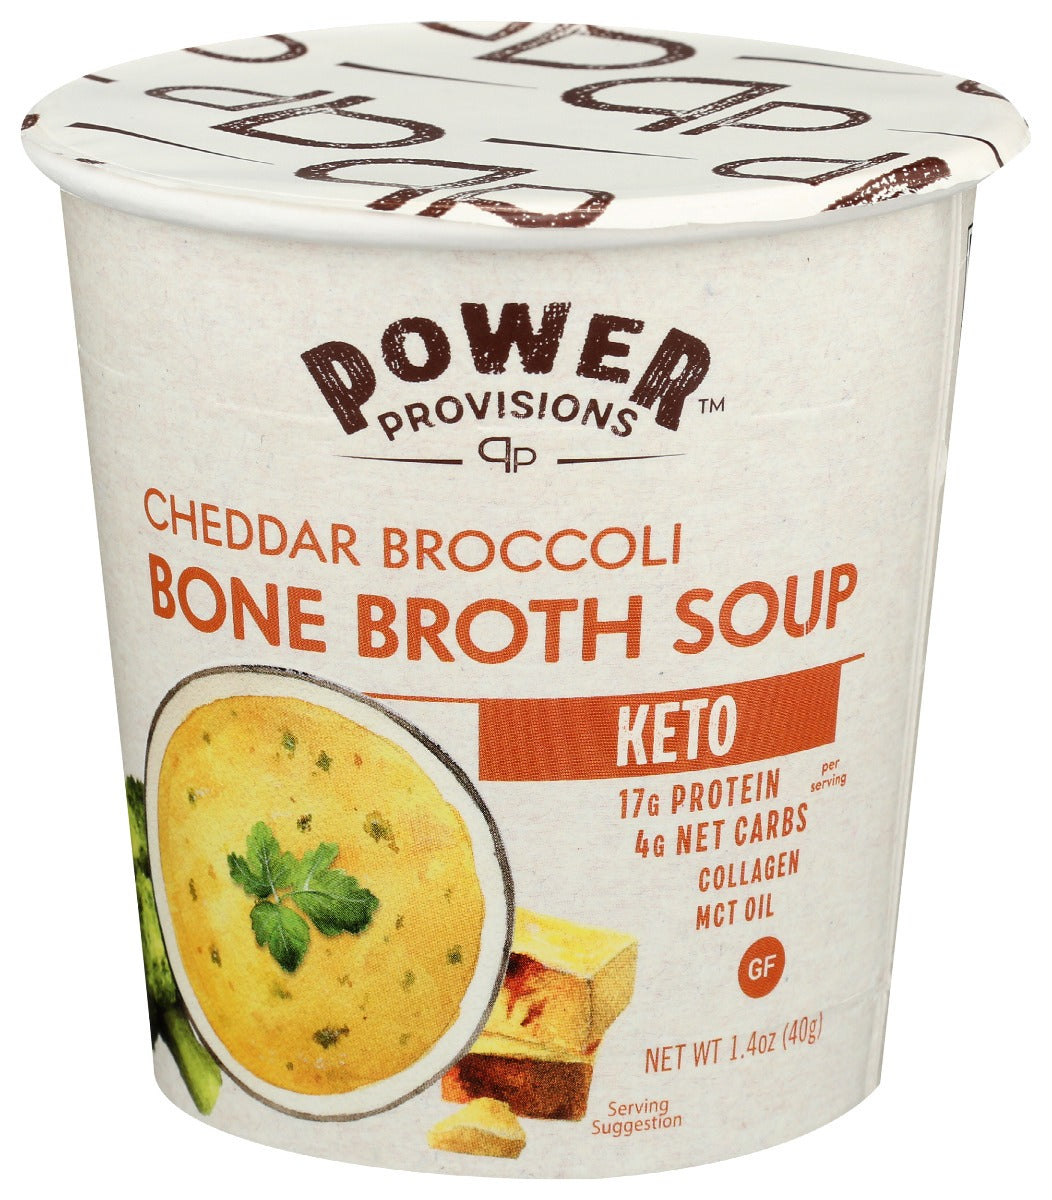 POWER PROVISIONS: Cheddar Broccoli Bone Broth Soup, 1.4 oz